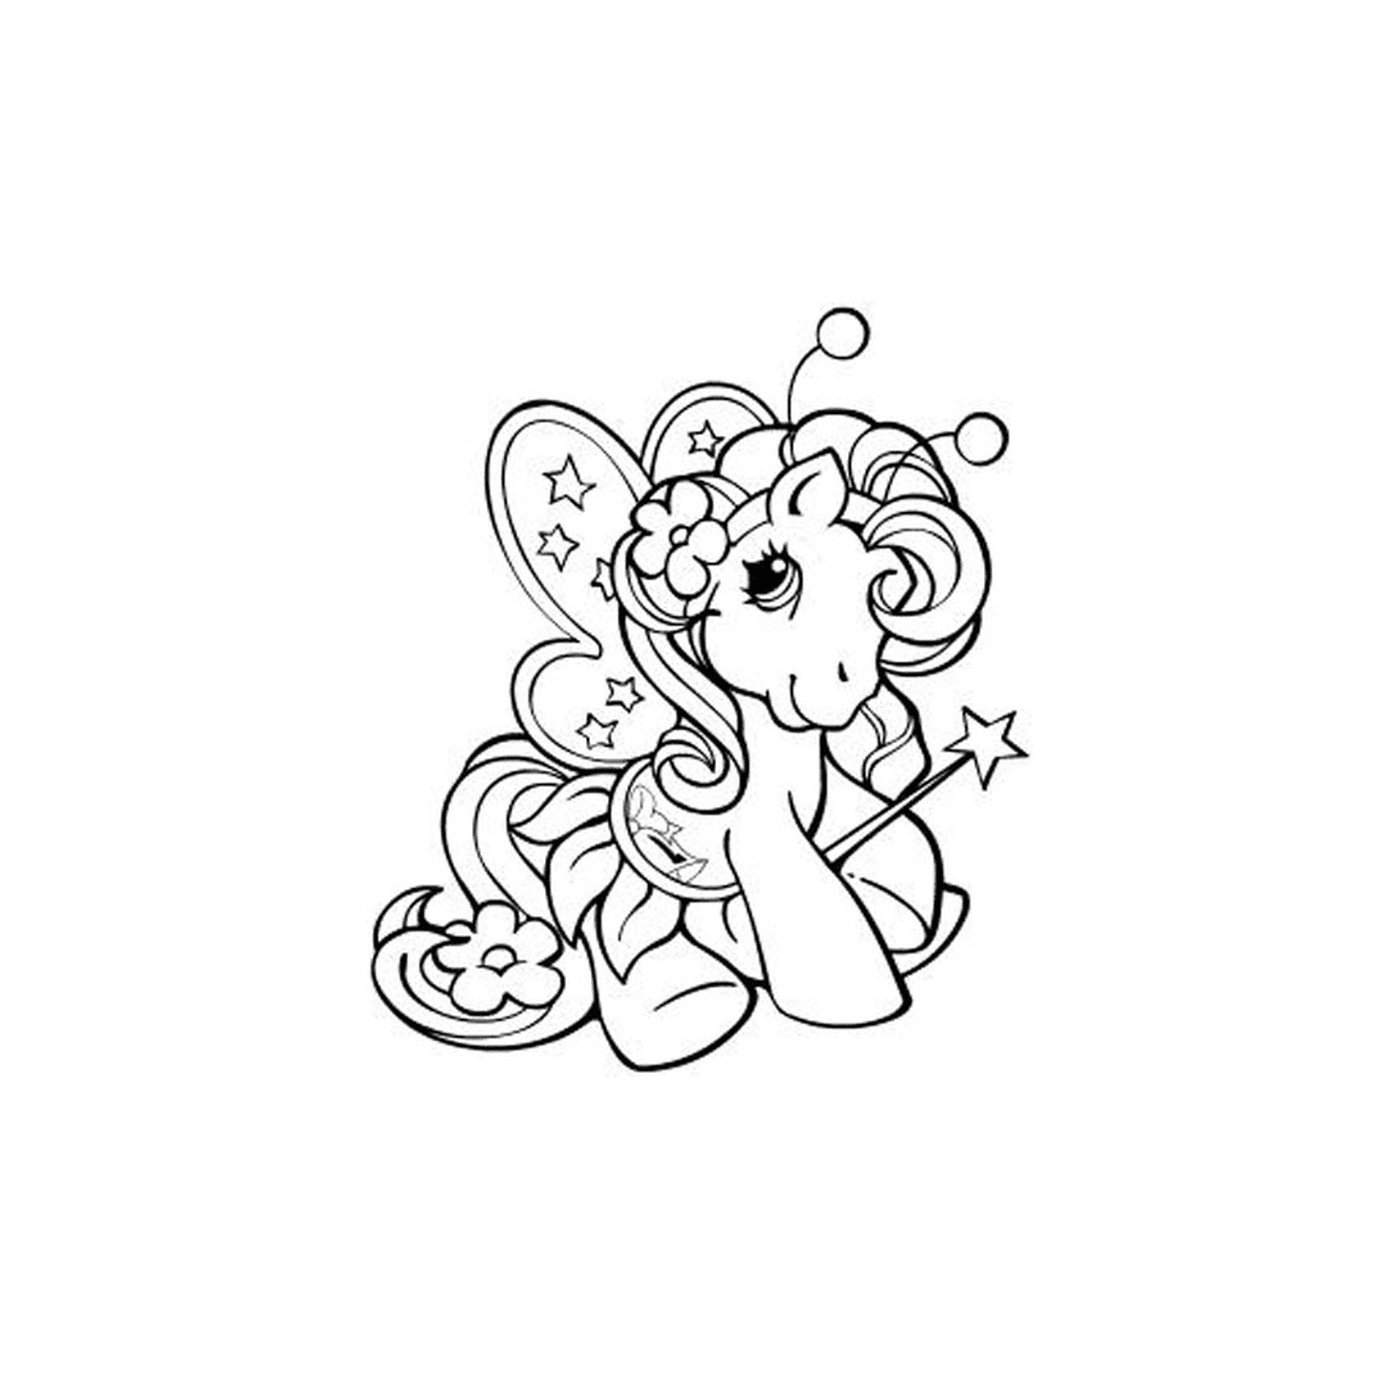  Little princess pony, magic and sweetness 